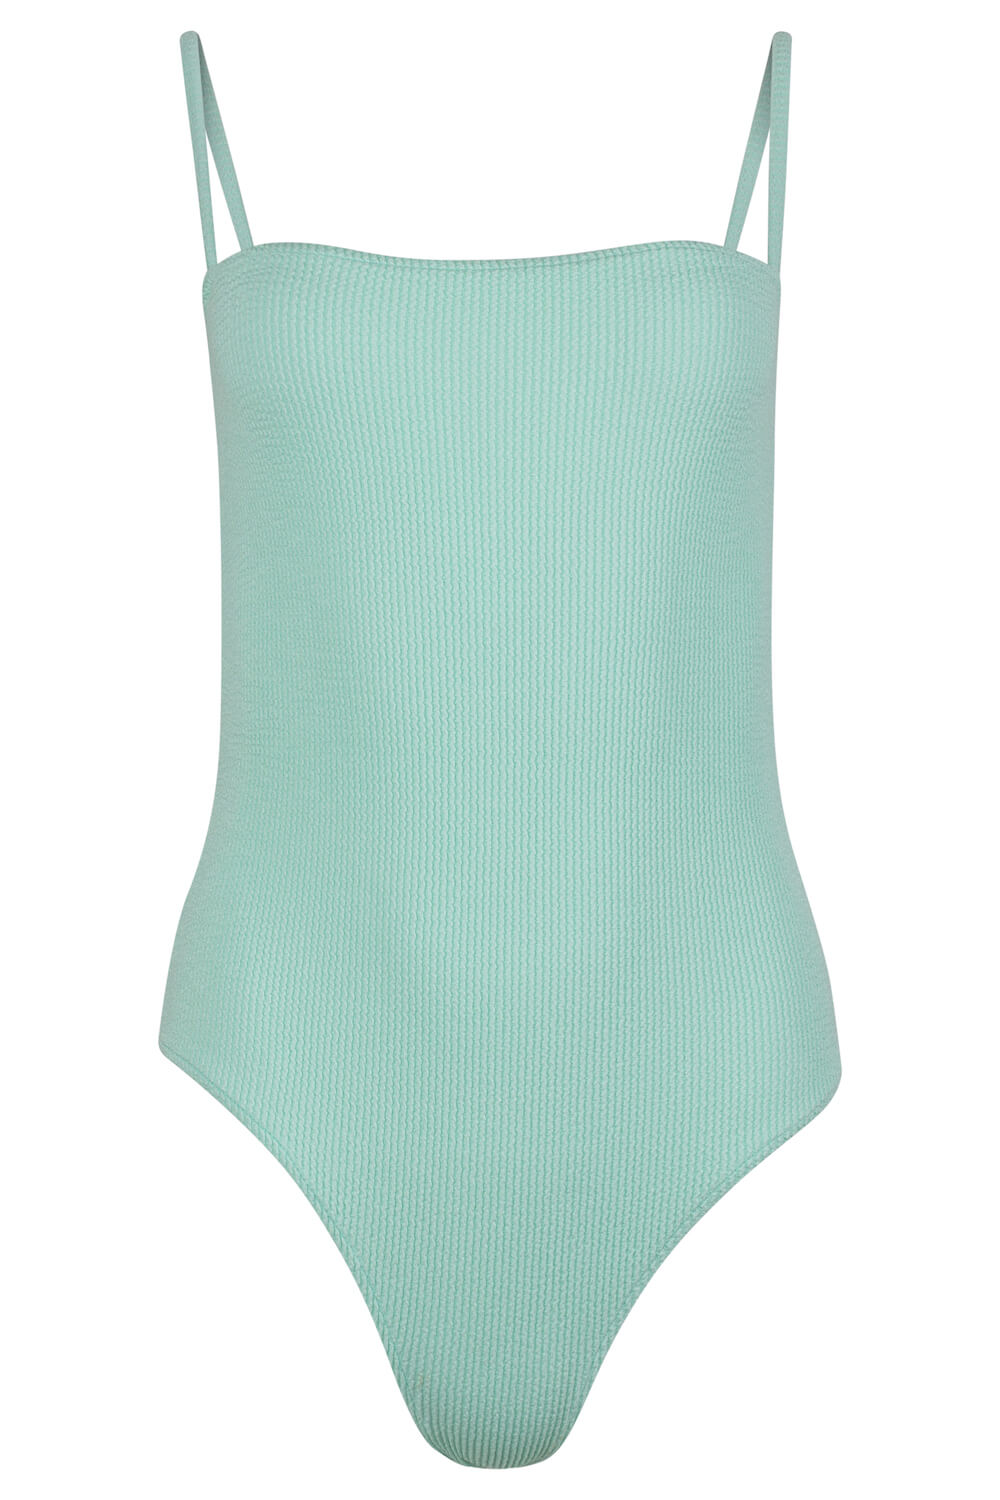 The Liz one piece swimsuit in textured fabric, aqua color